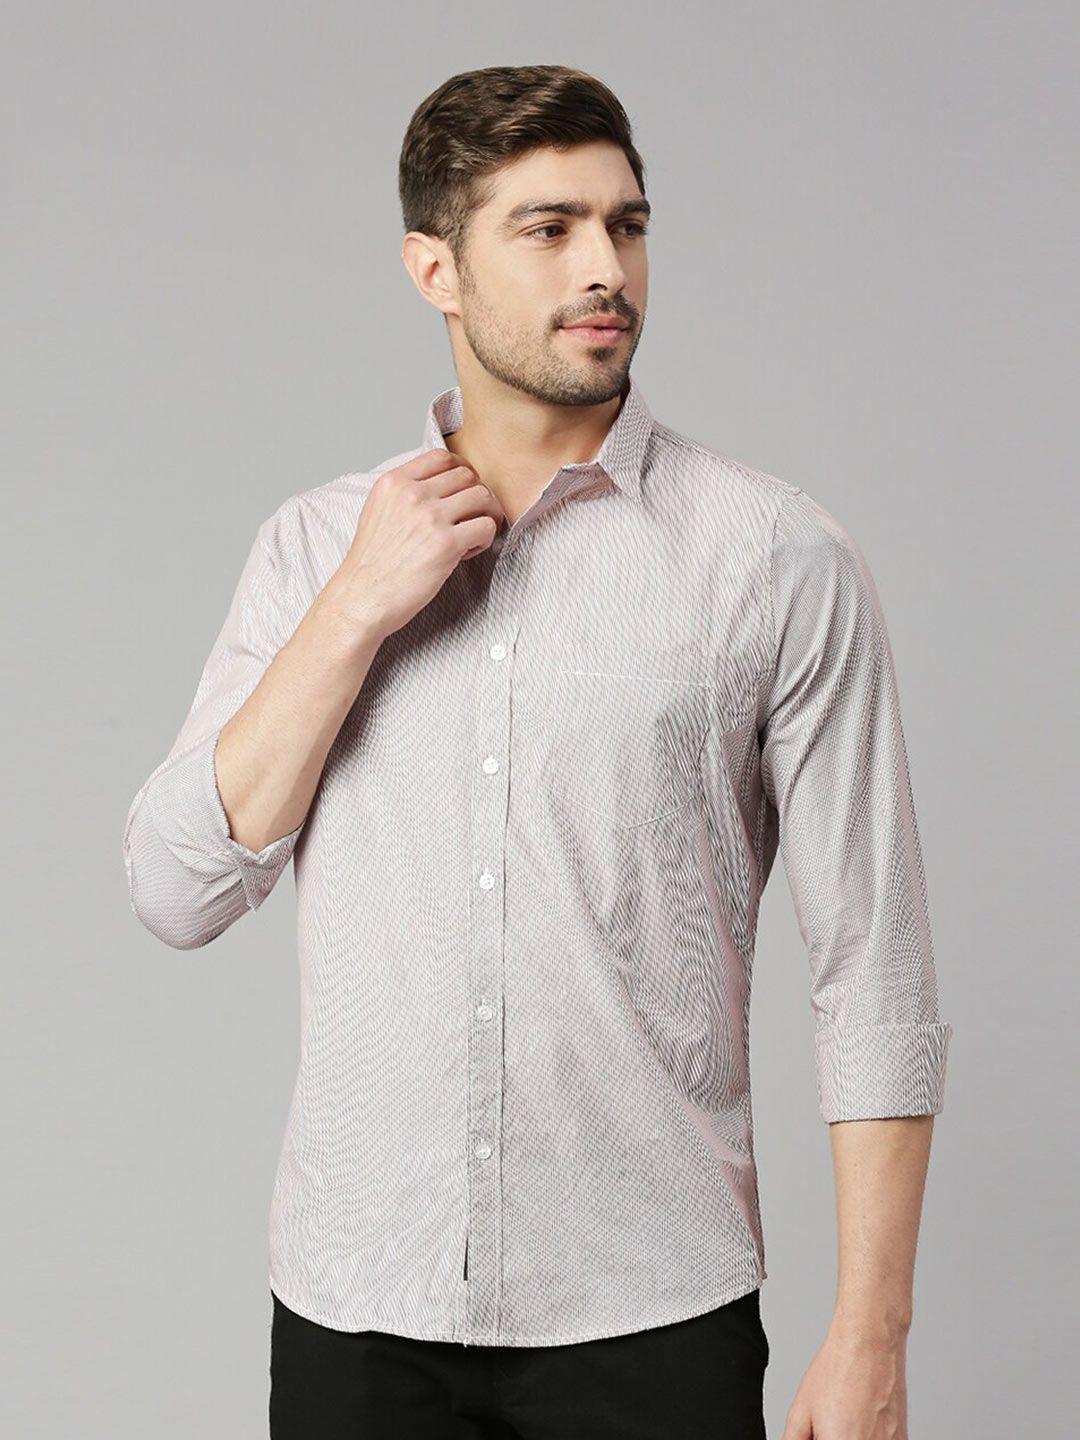 thomas scott classic slim fit vertical striped pure cotton casual shirt